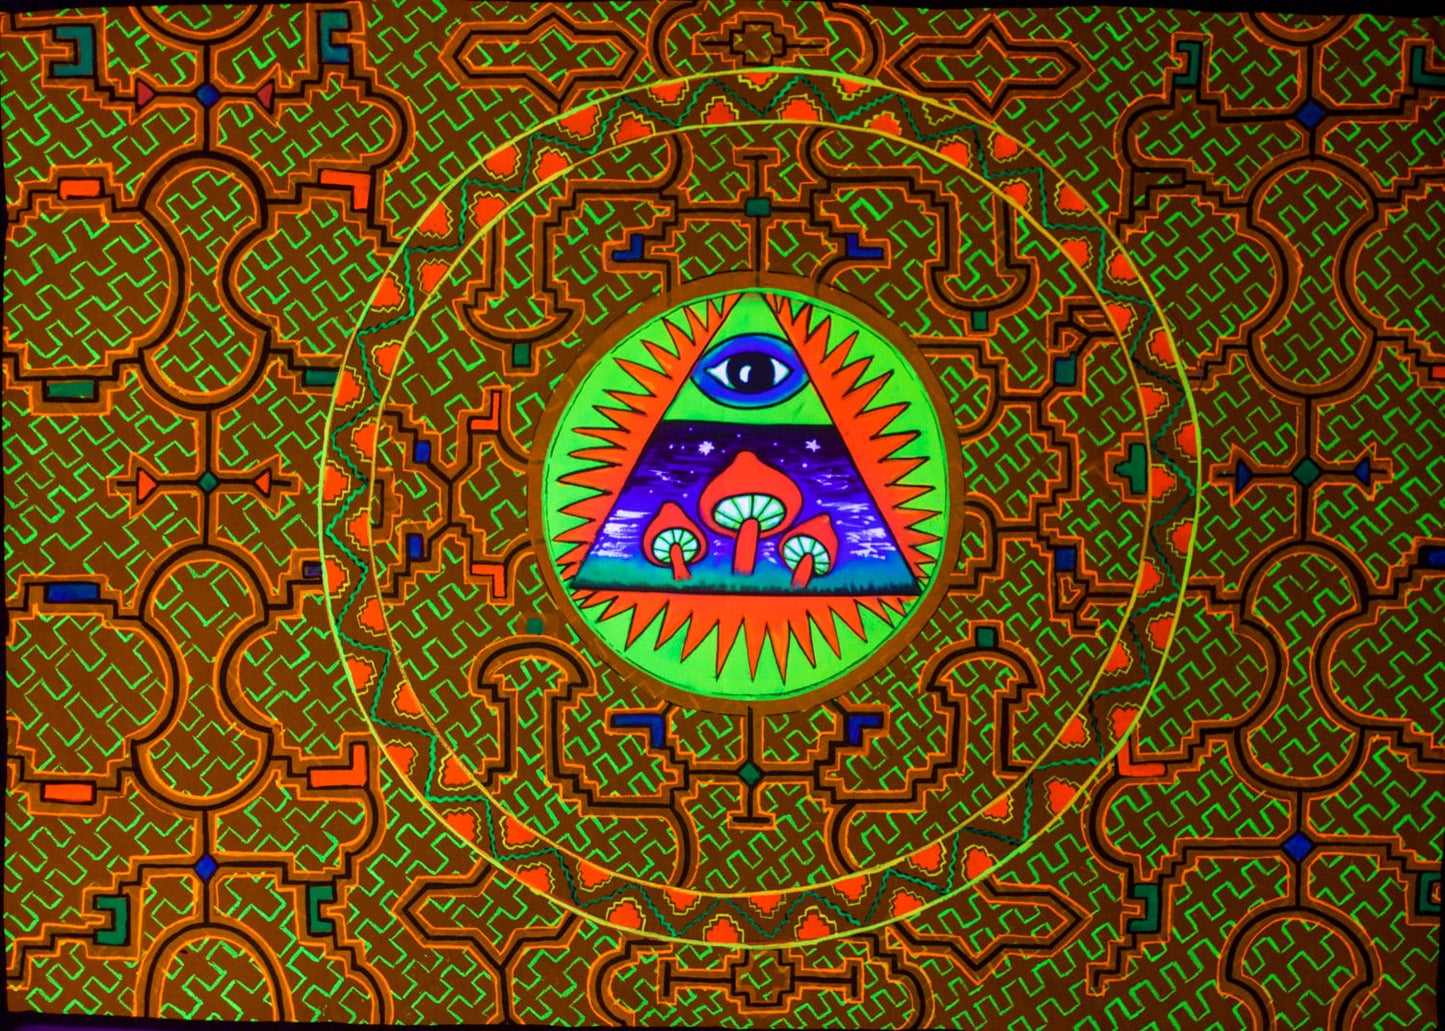 Magic Illuminati Shroom Painting - 90x60cm - handmade on order - fully blacklight glowing colors - psychedelic psilocybin visionary artwork